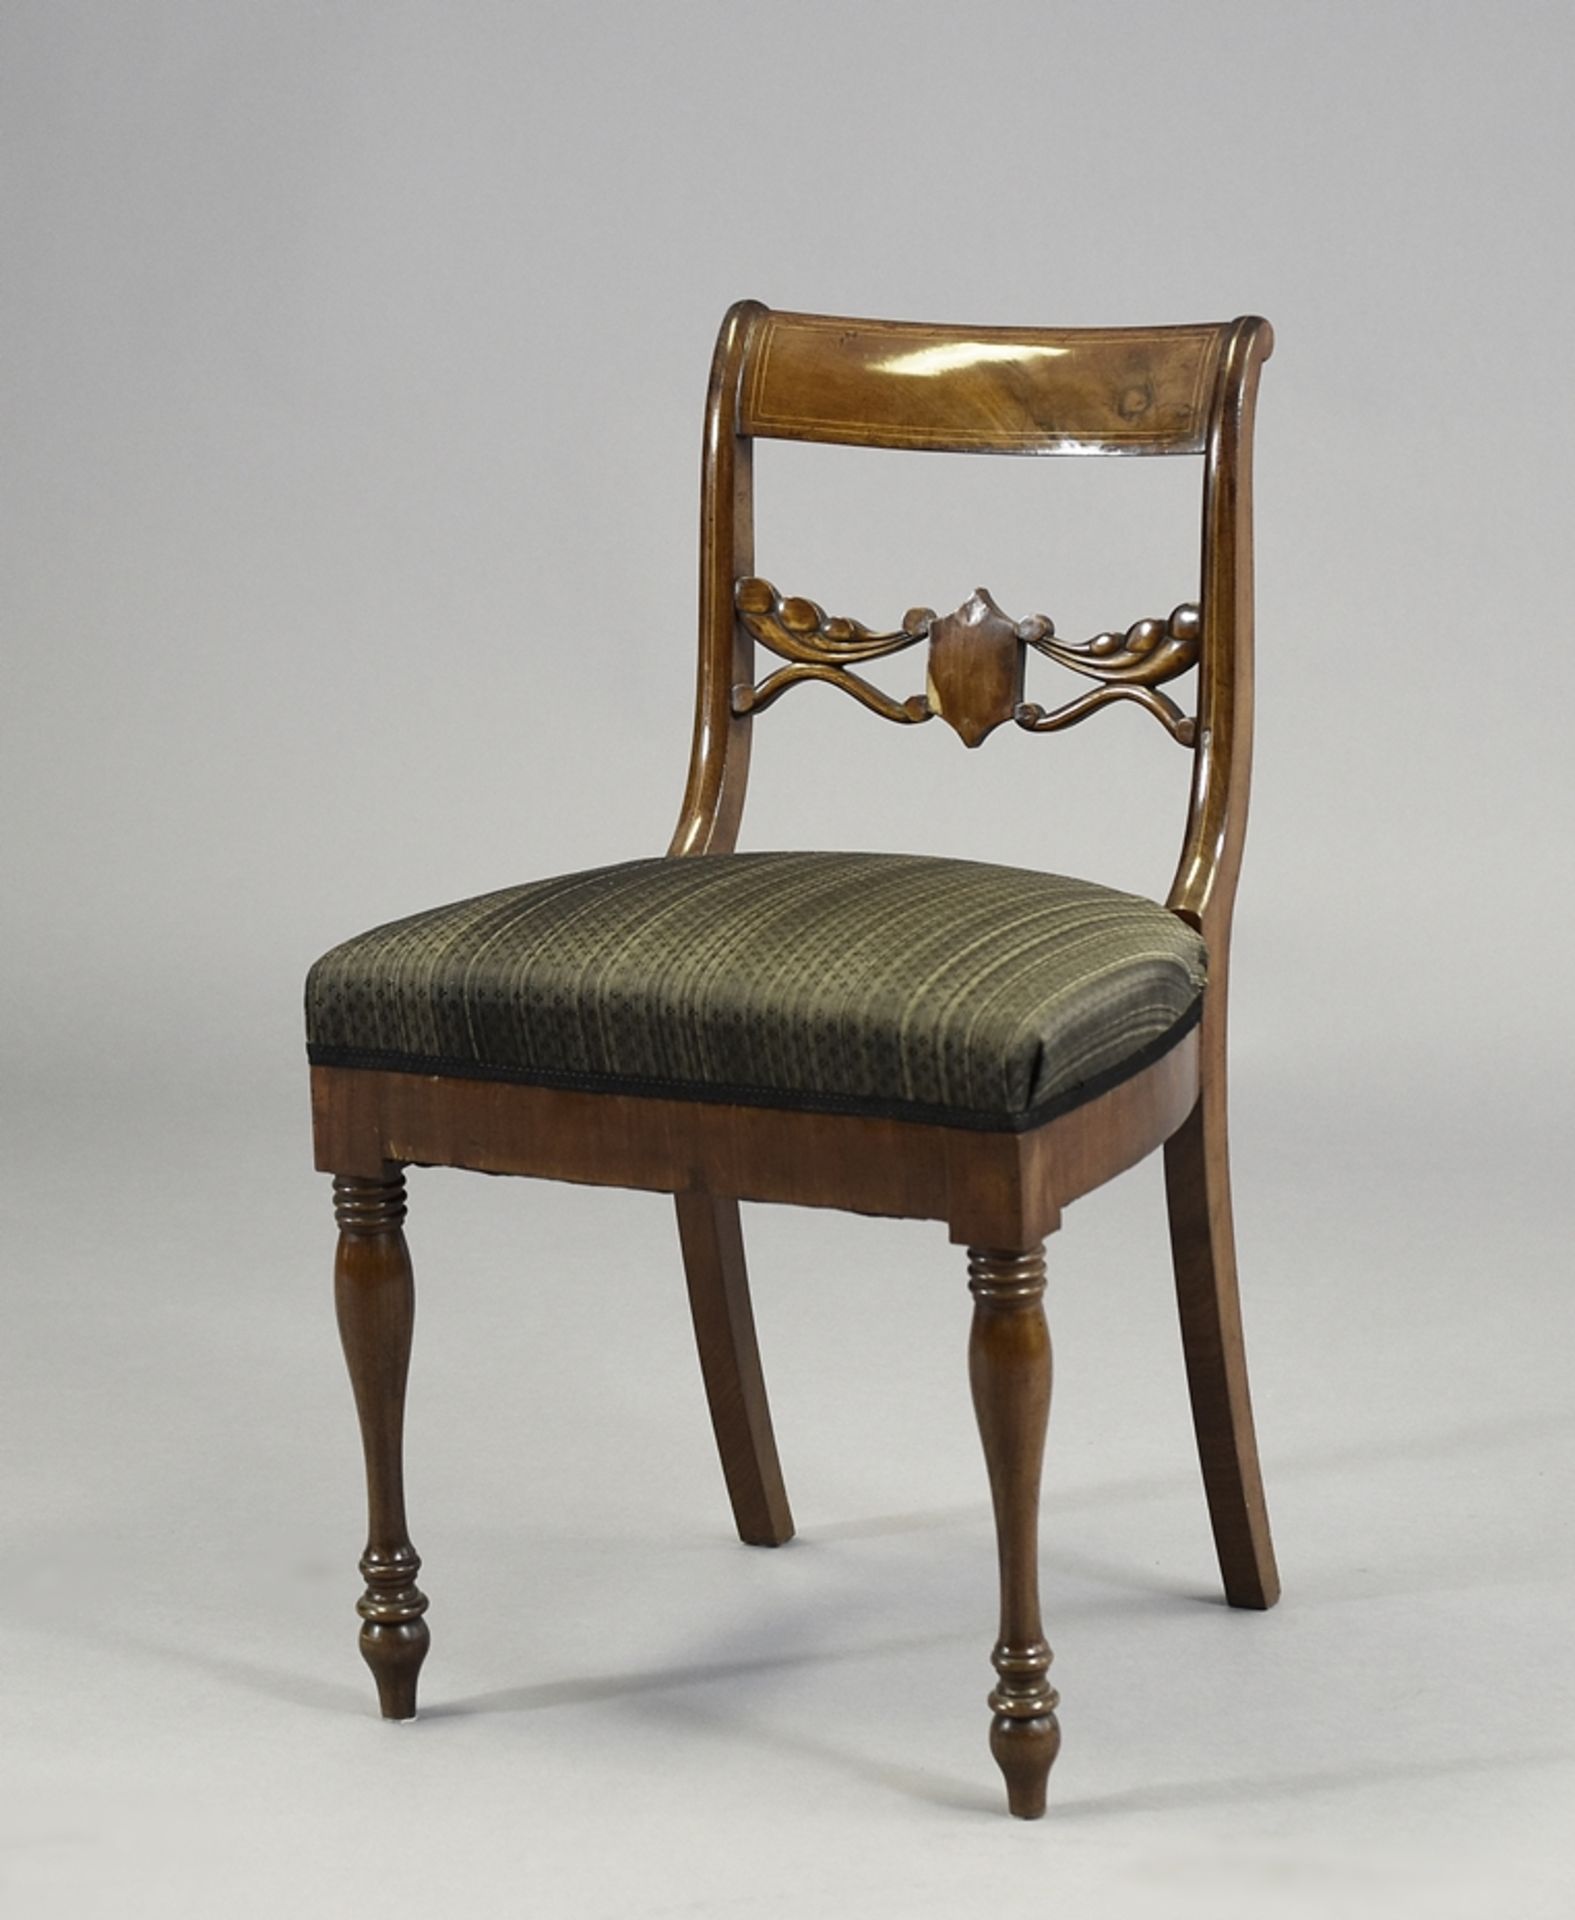 Biedermeier-Stuhl. Lehne mit ornamentaler Querstrebe. Polstersitz mit Roßhaarbezug. Mahagoni. Um 18